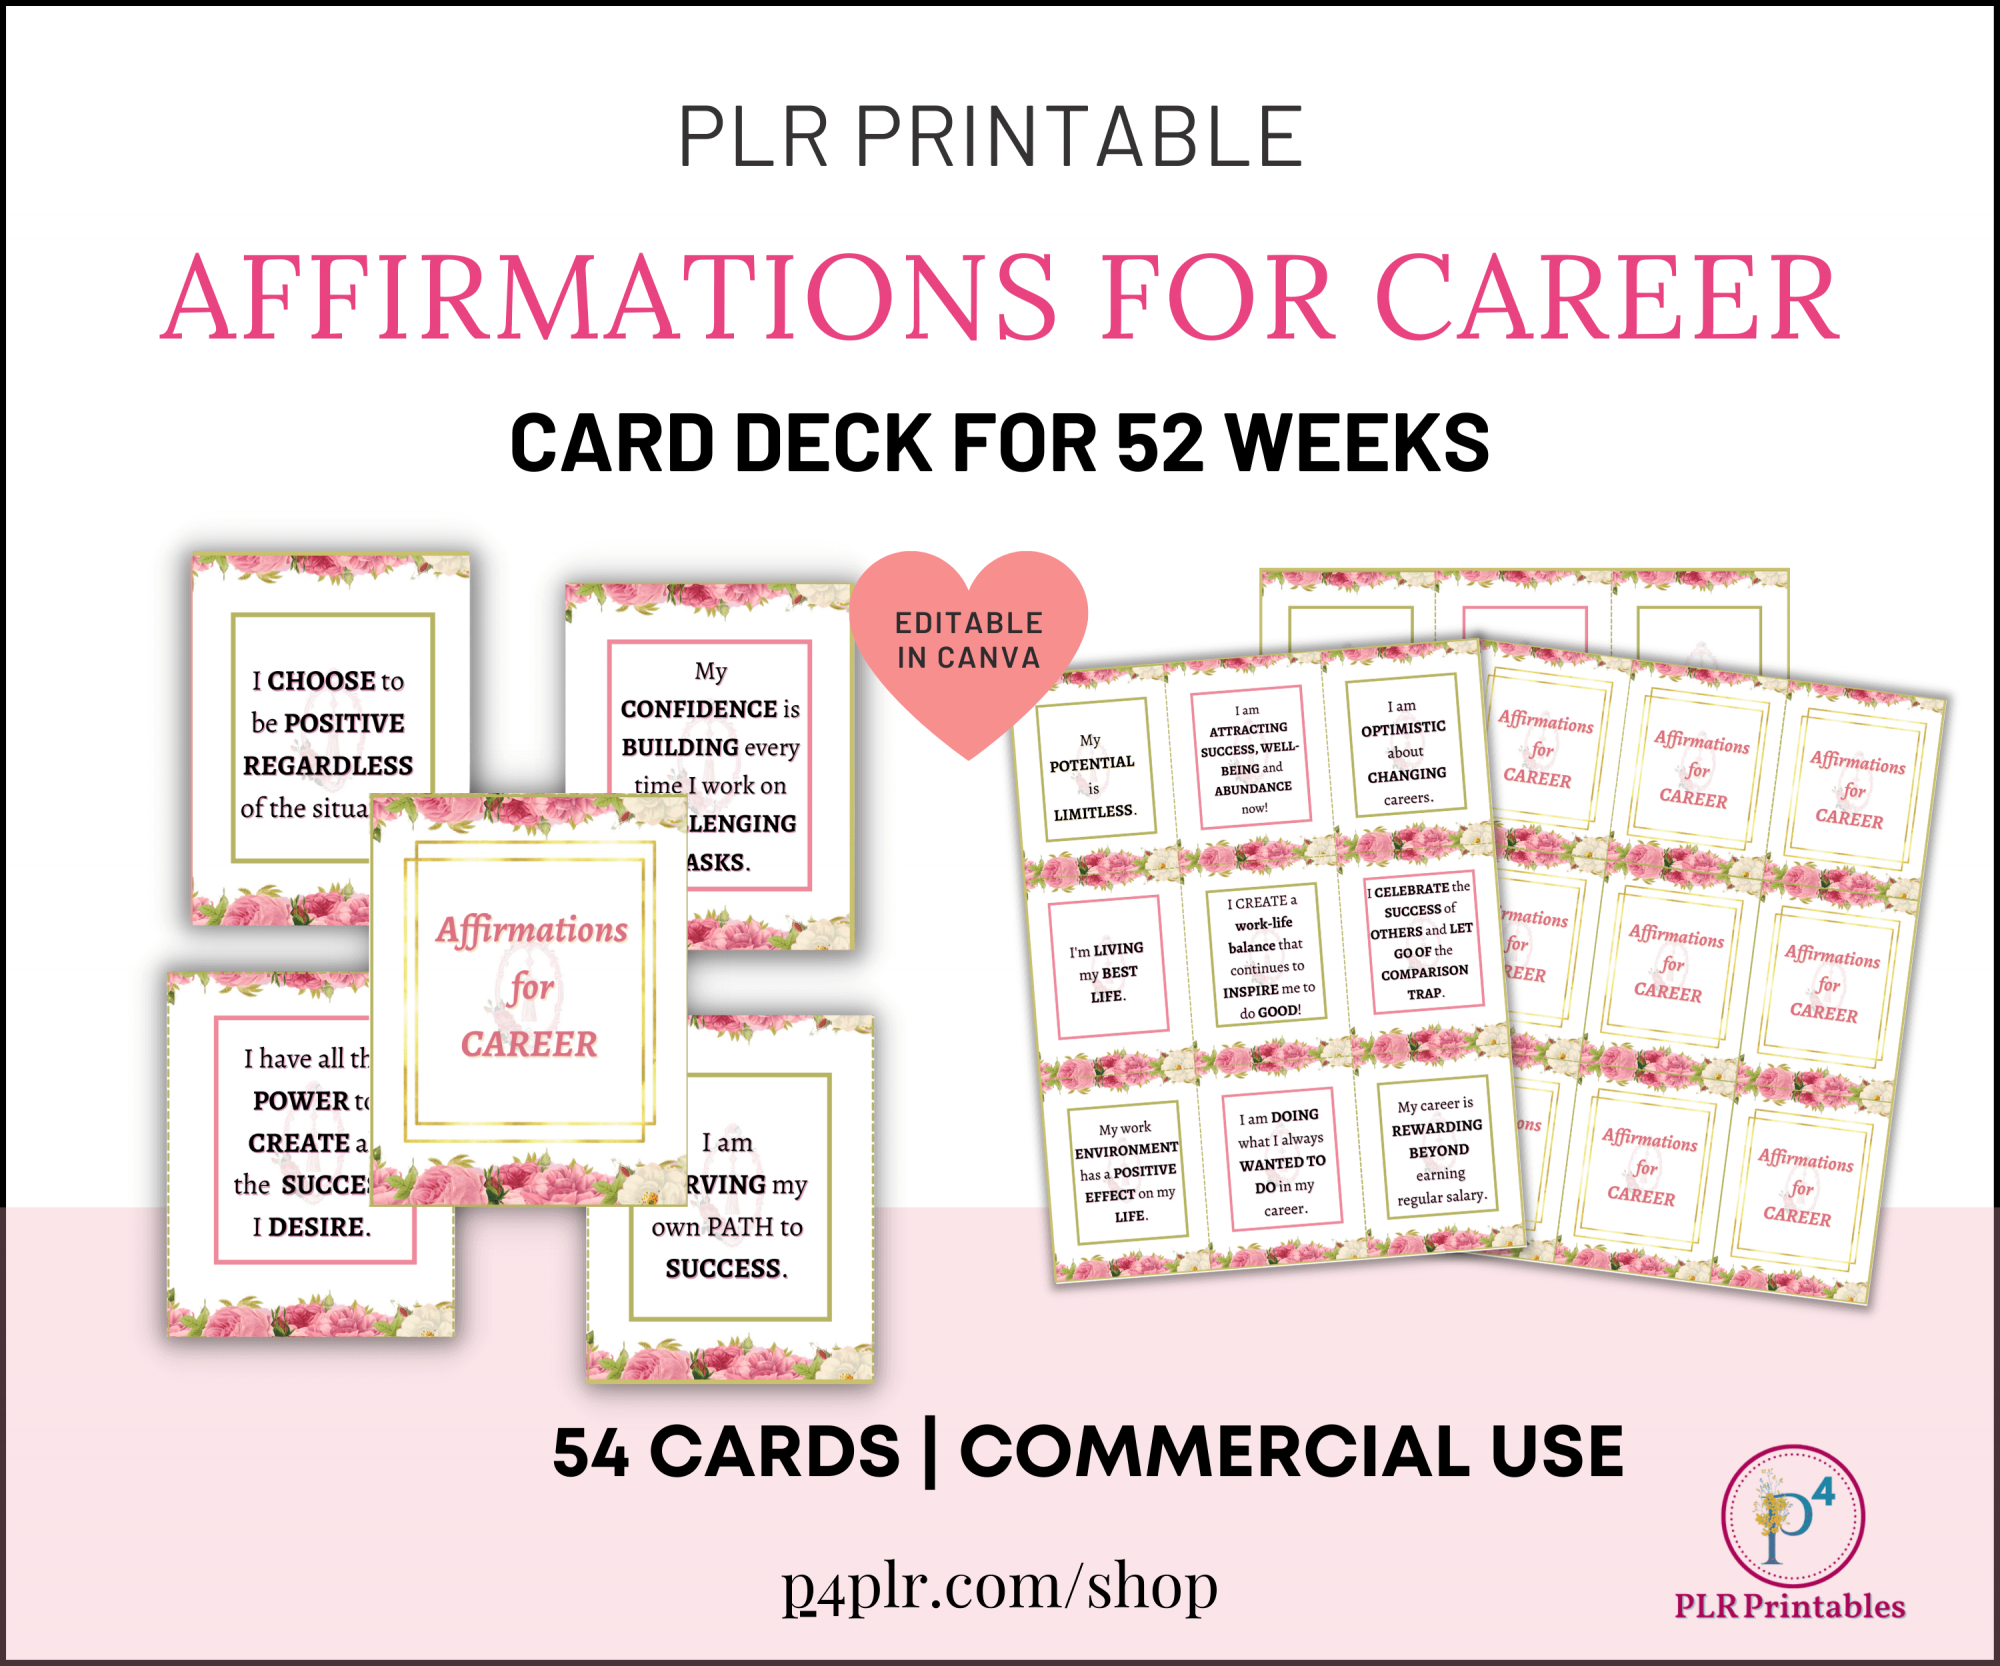 Affirmations for Career Cards Deck PLR Printable